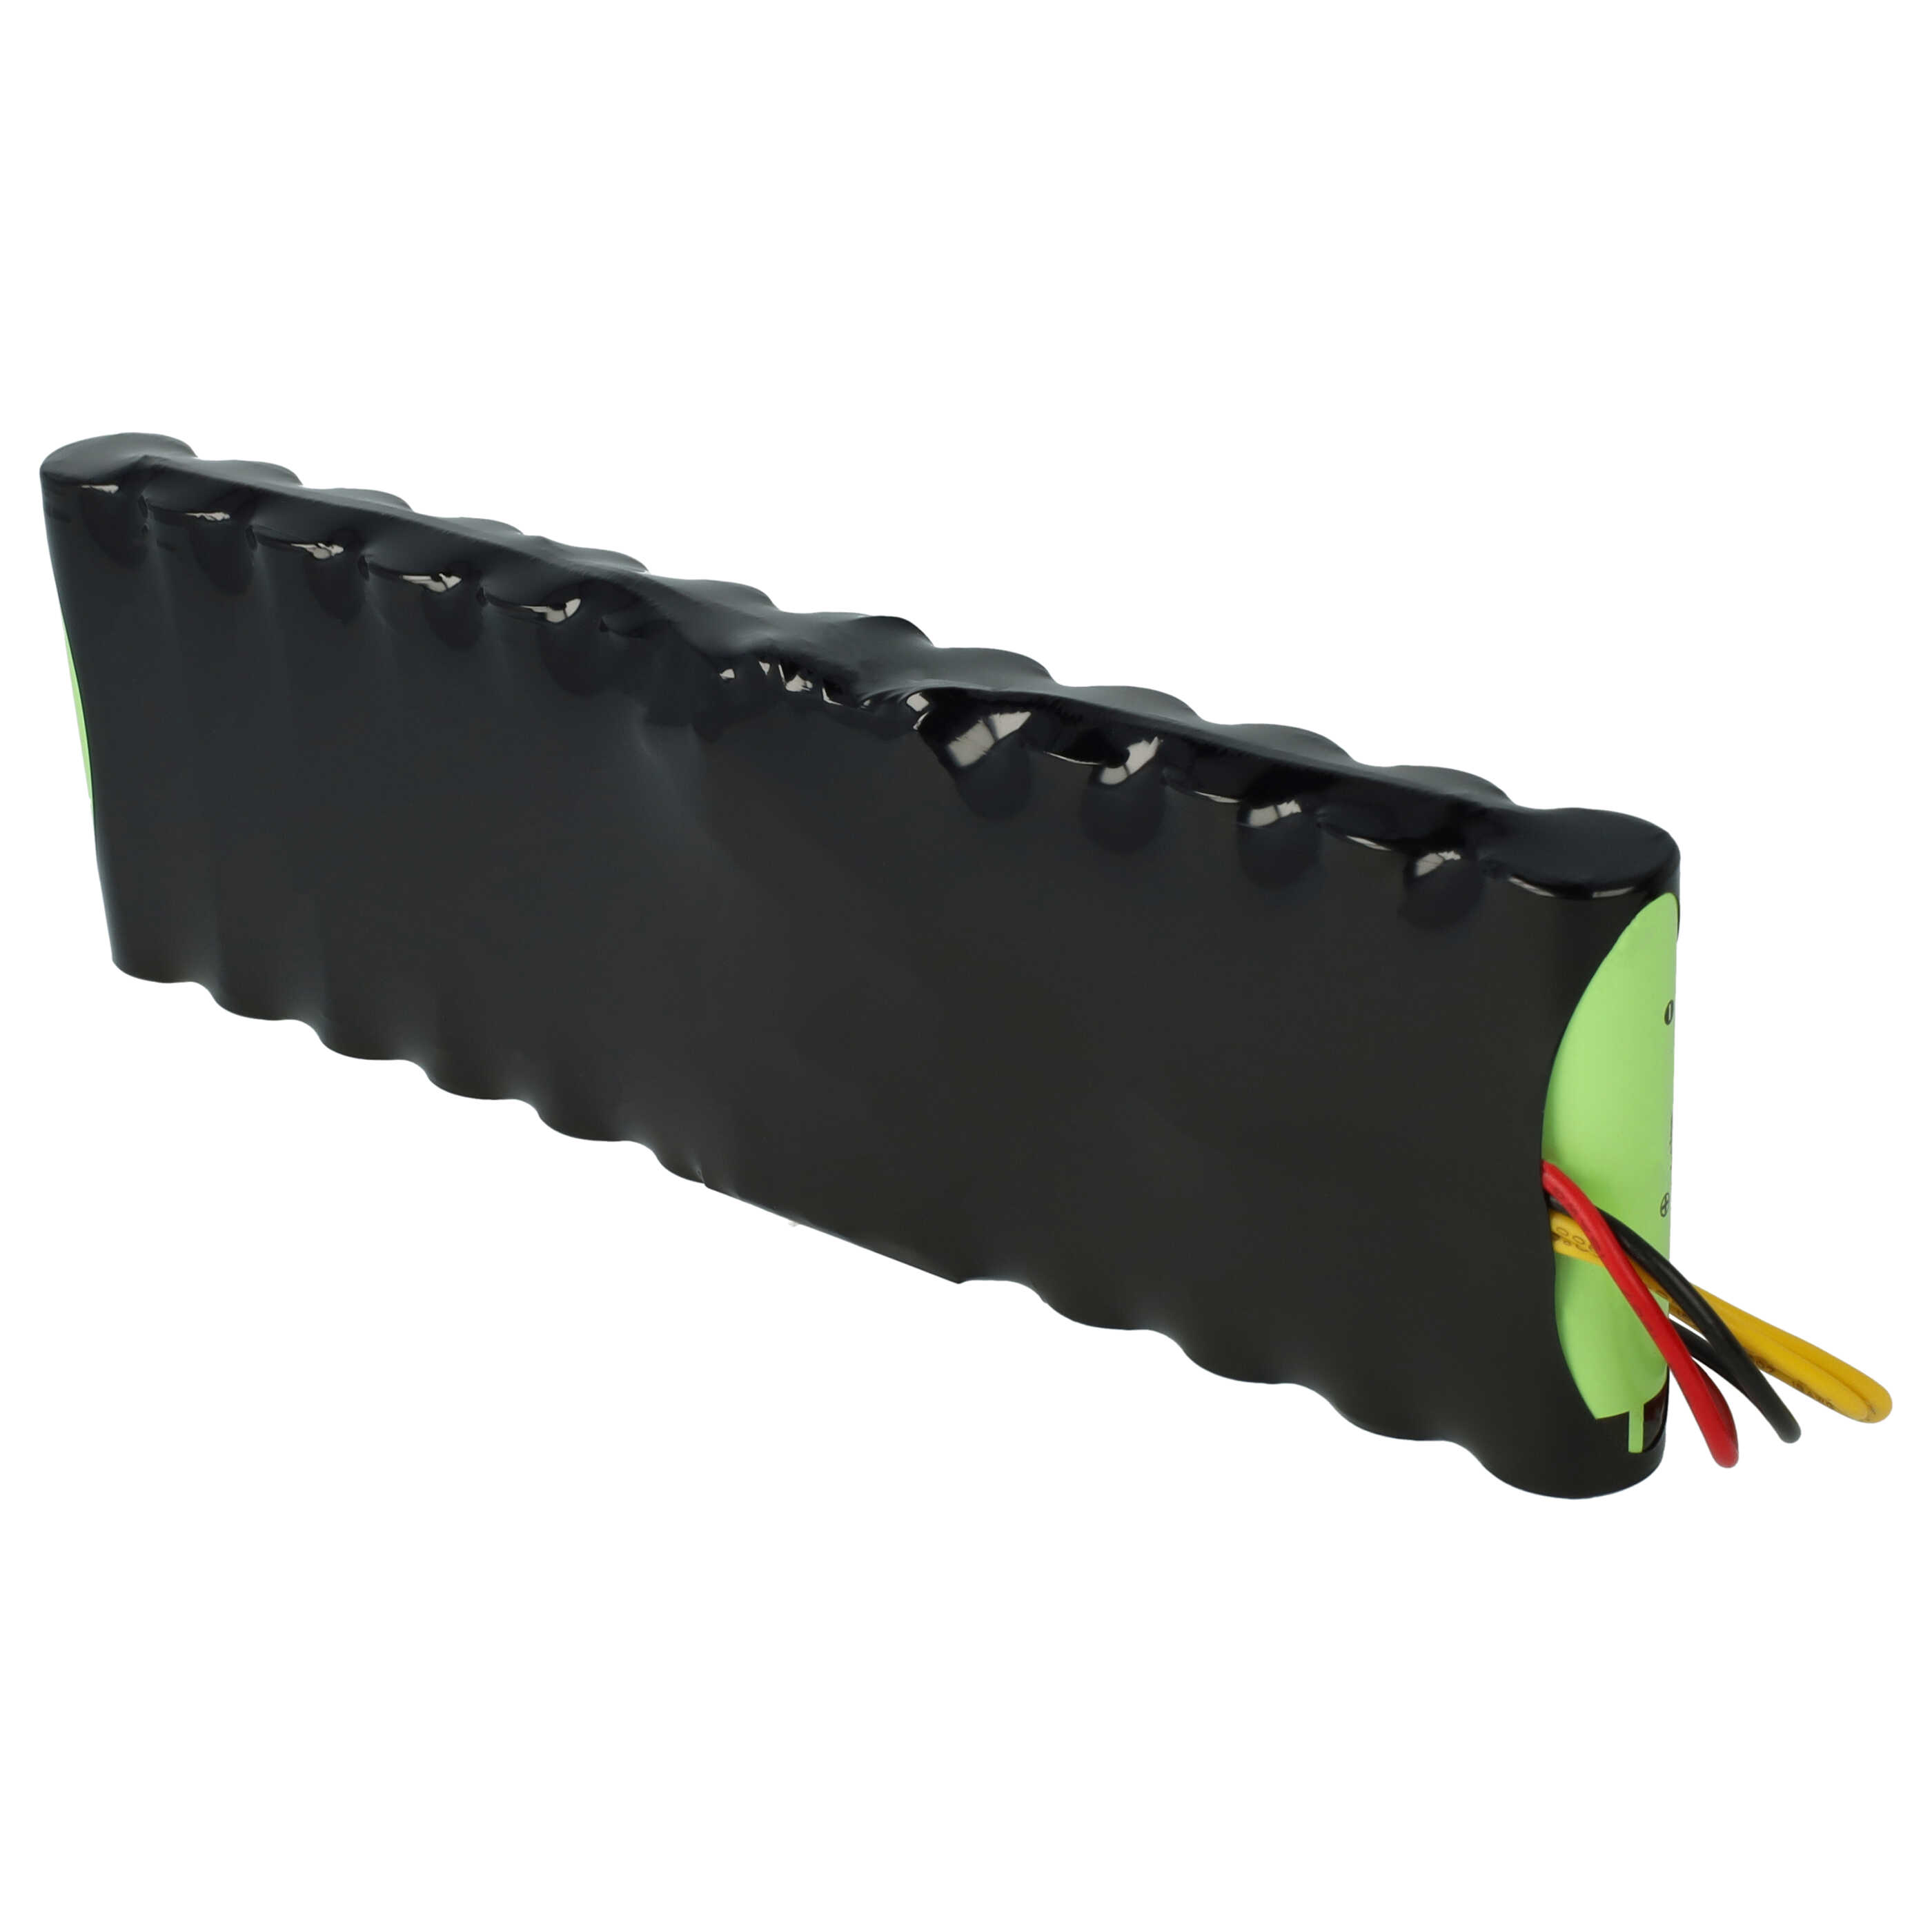 Lawnmower Battery Replacement for Husqvarna 578 84 87-03, 578 84 87-02, 578 84 87-01 - 6800mAh 22.2V Li-Ion